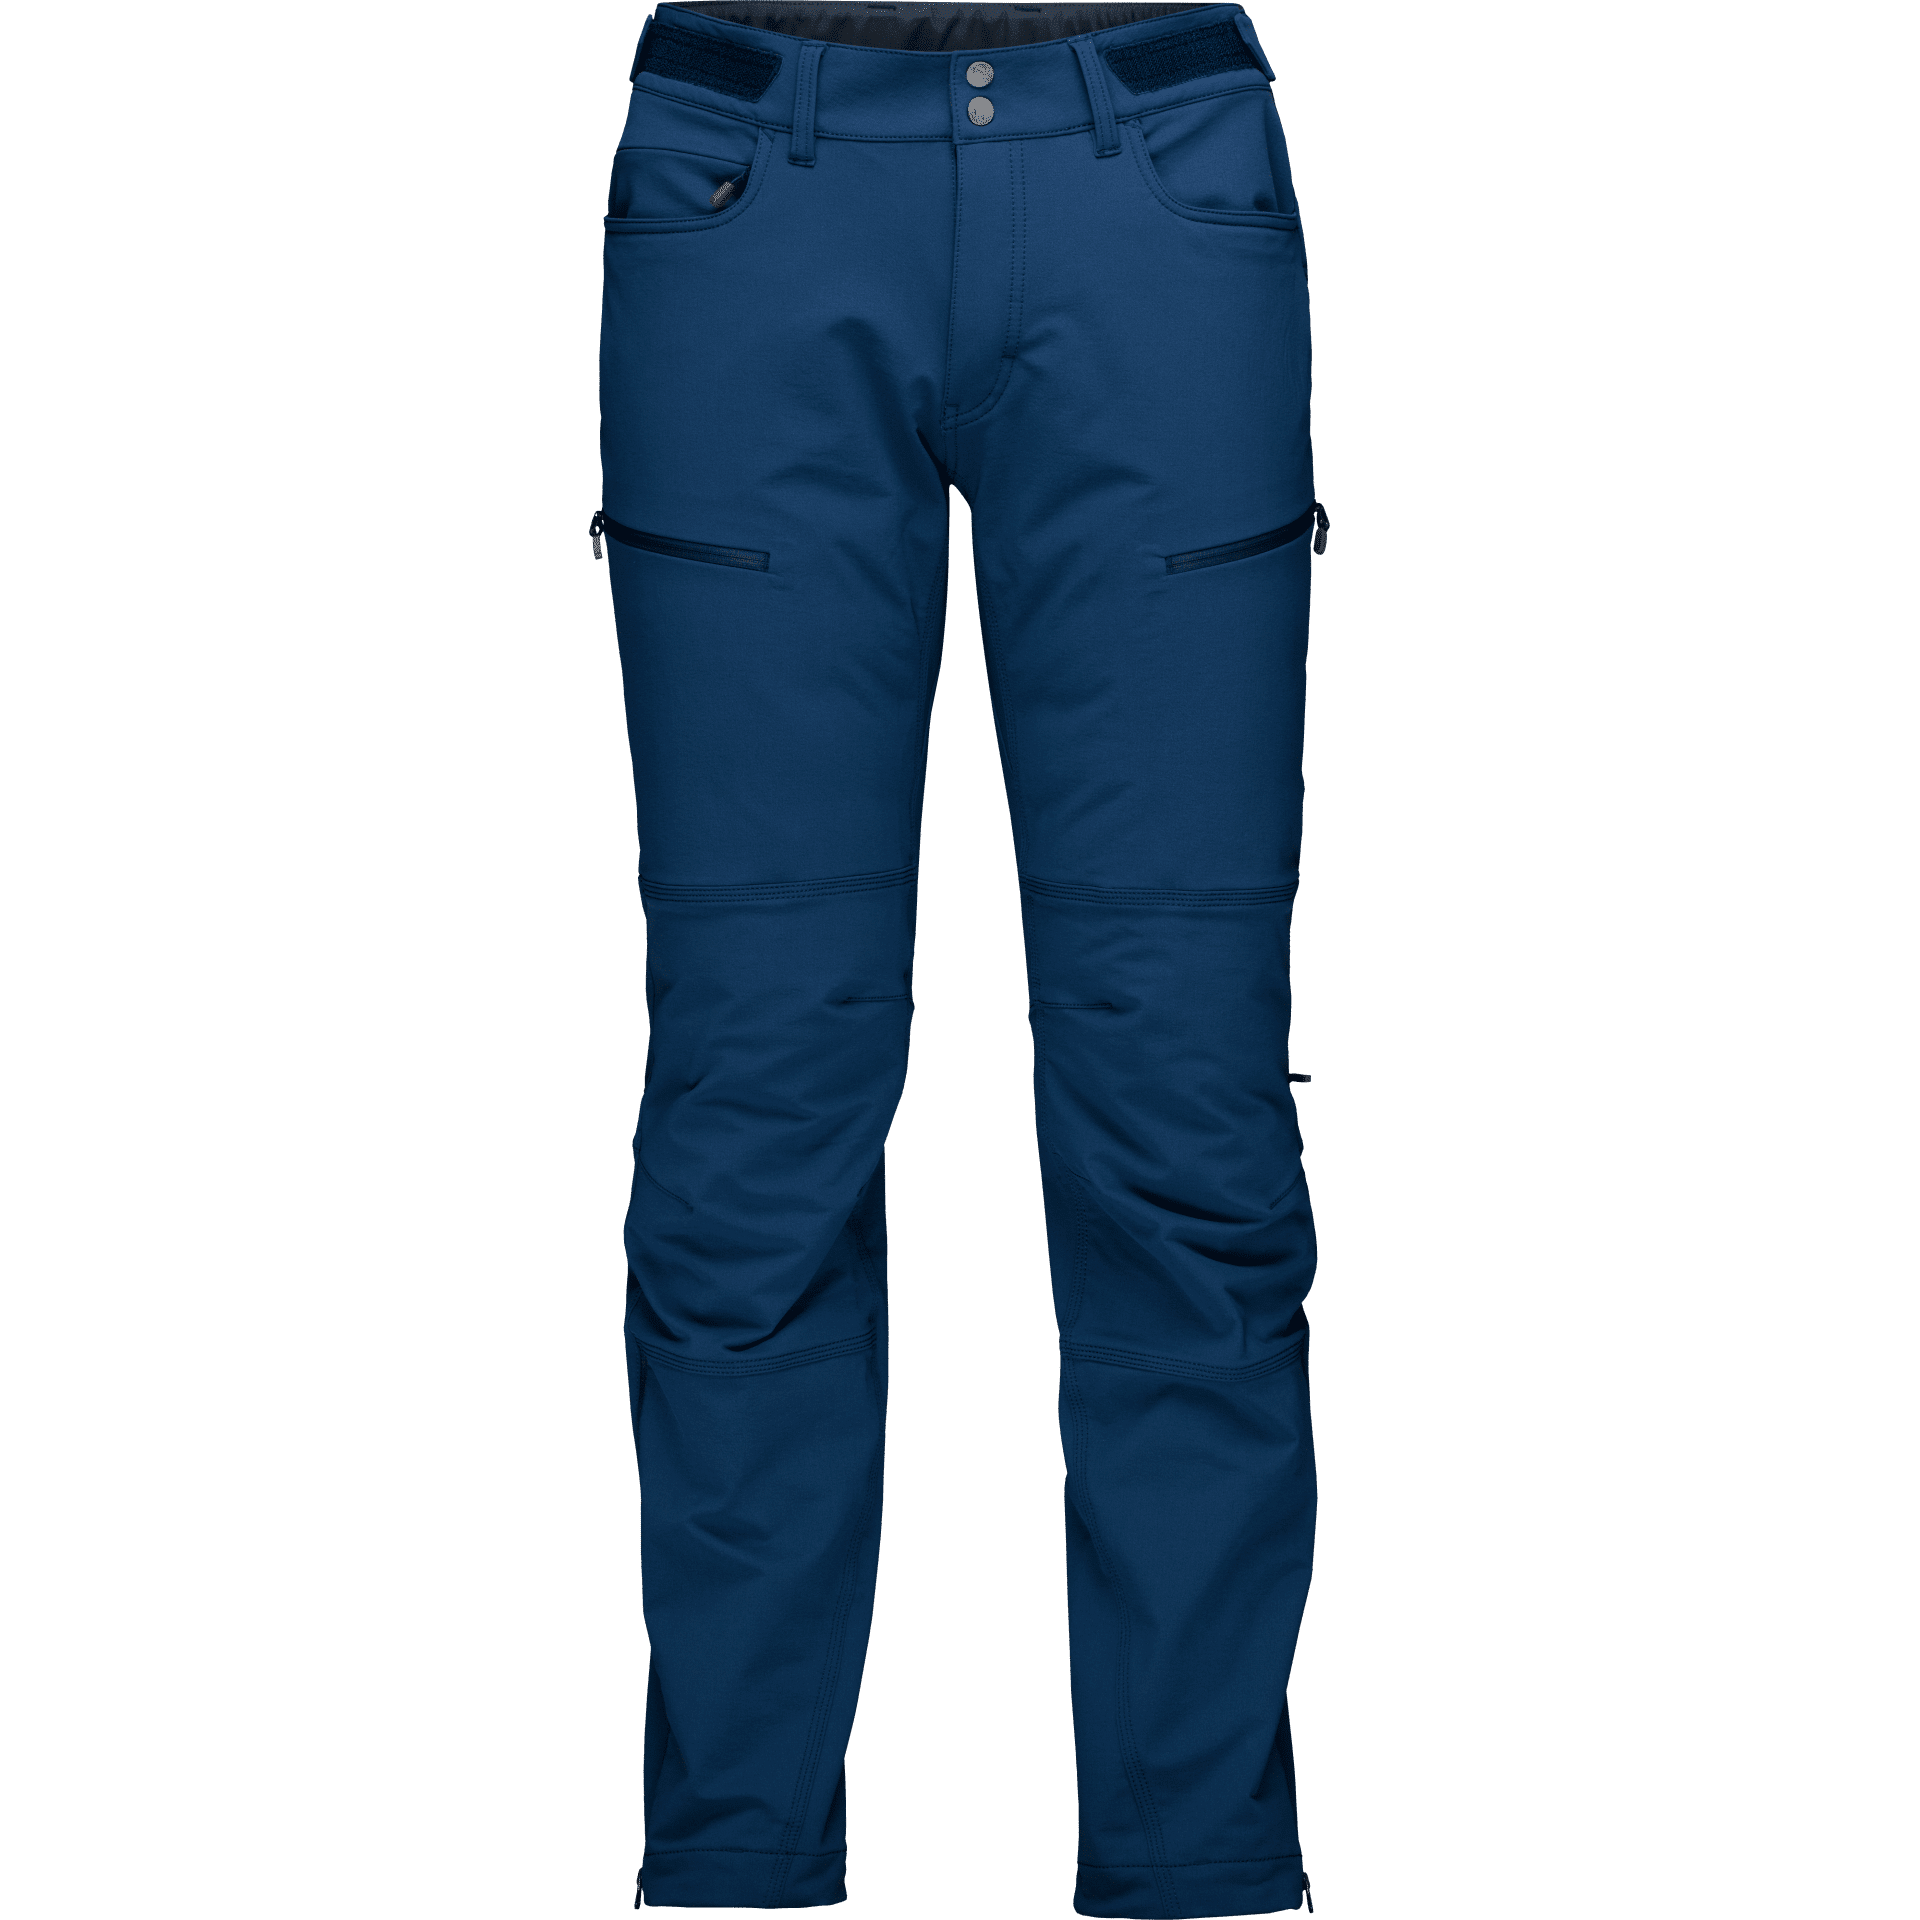 Nørrona Svalbard Flex1 Pants - Walking pants - Men's